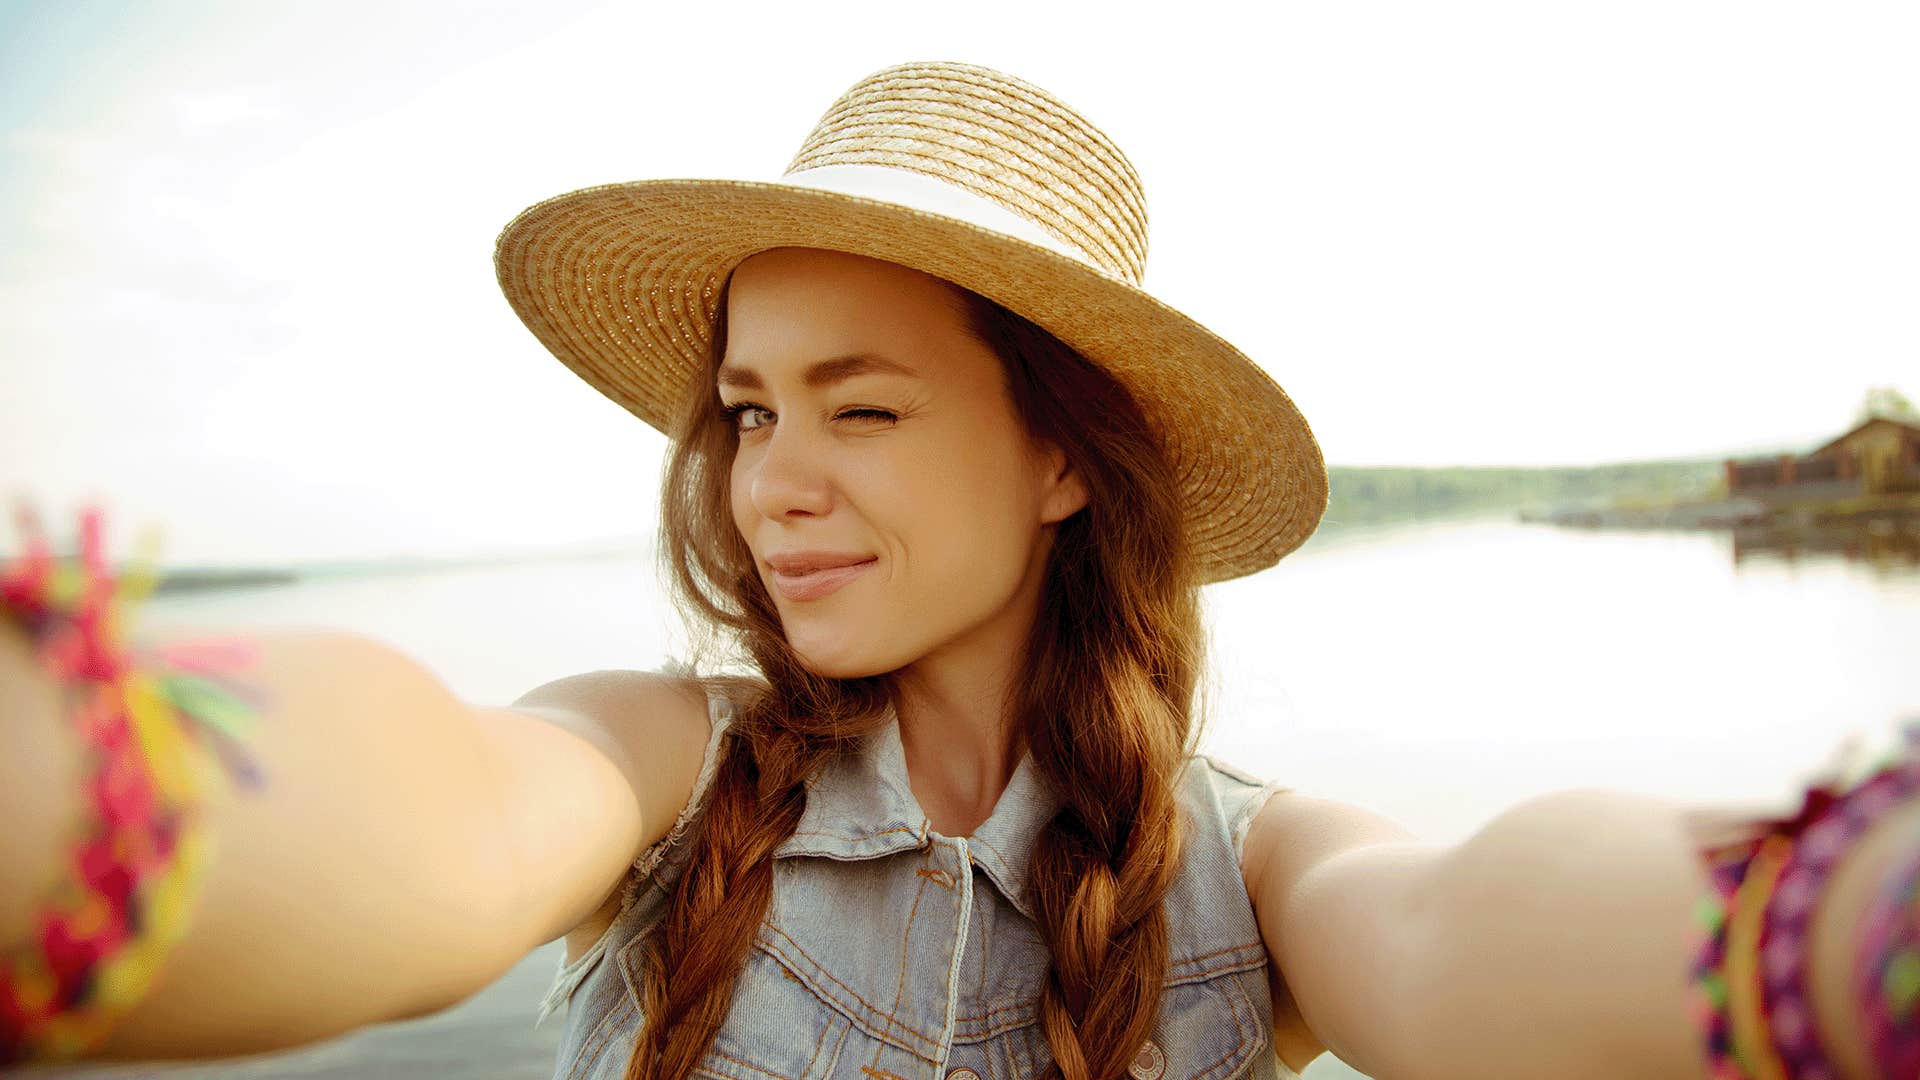 happy woman taking a selfie outdoors